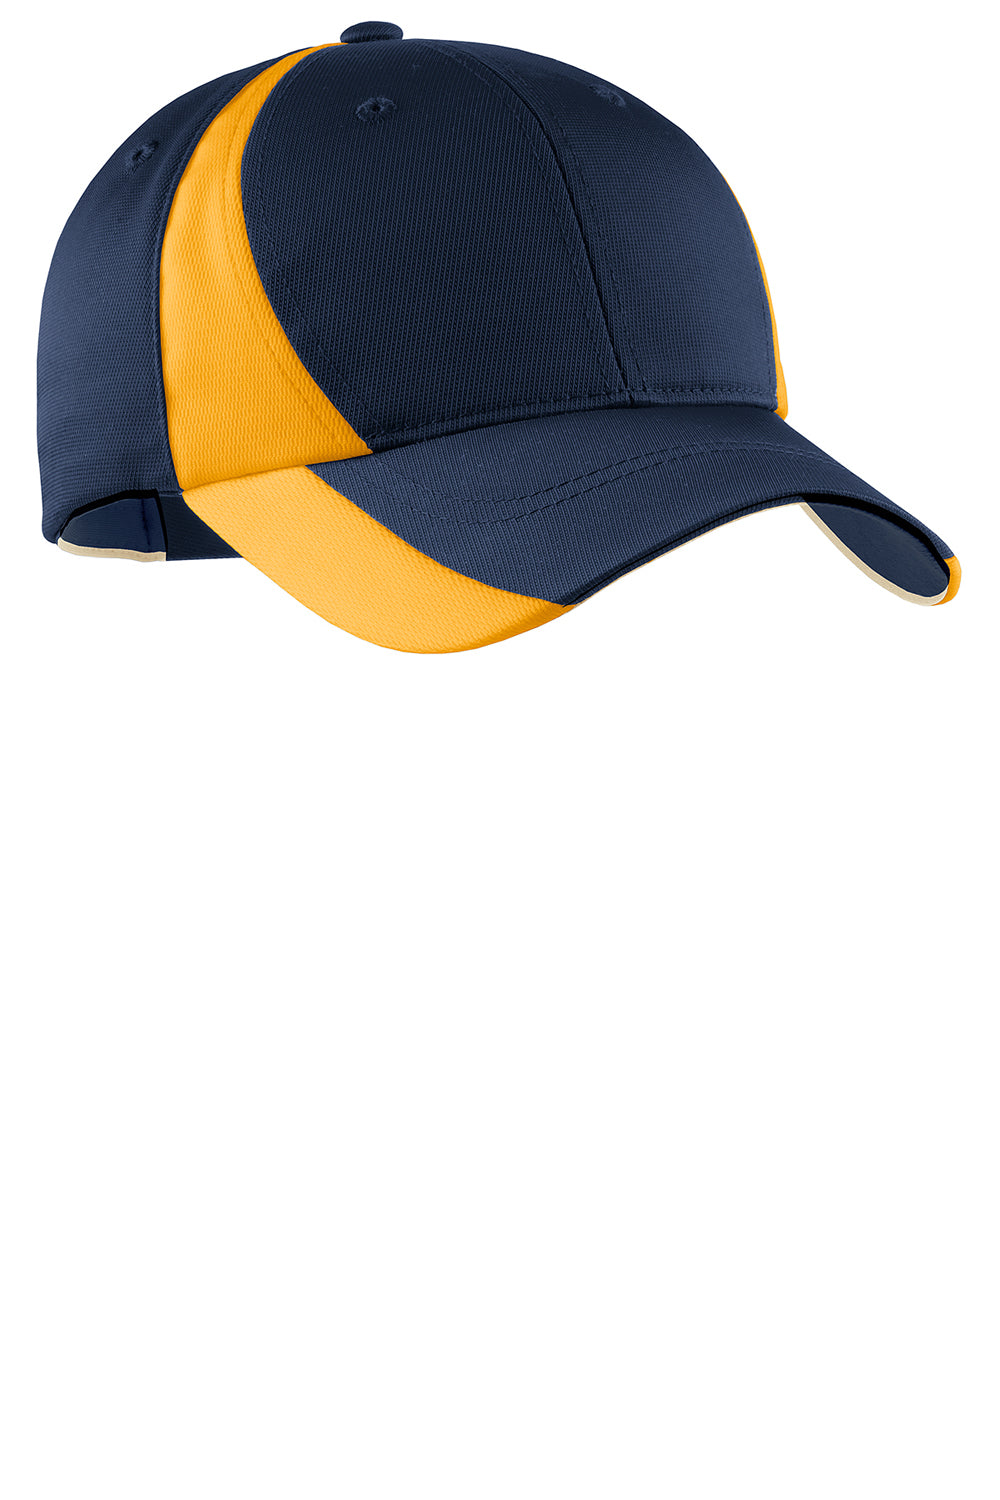 Sport-Tek STC11 Mens Dry Zone Moisture Wicking Adjustable Hat Navy Blue/Gold Front